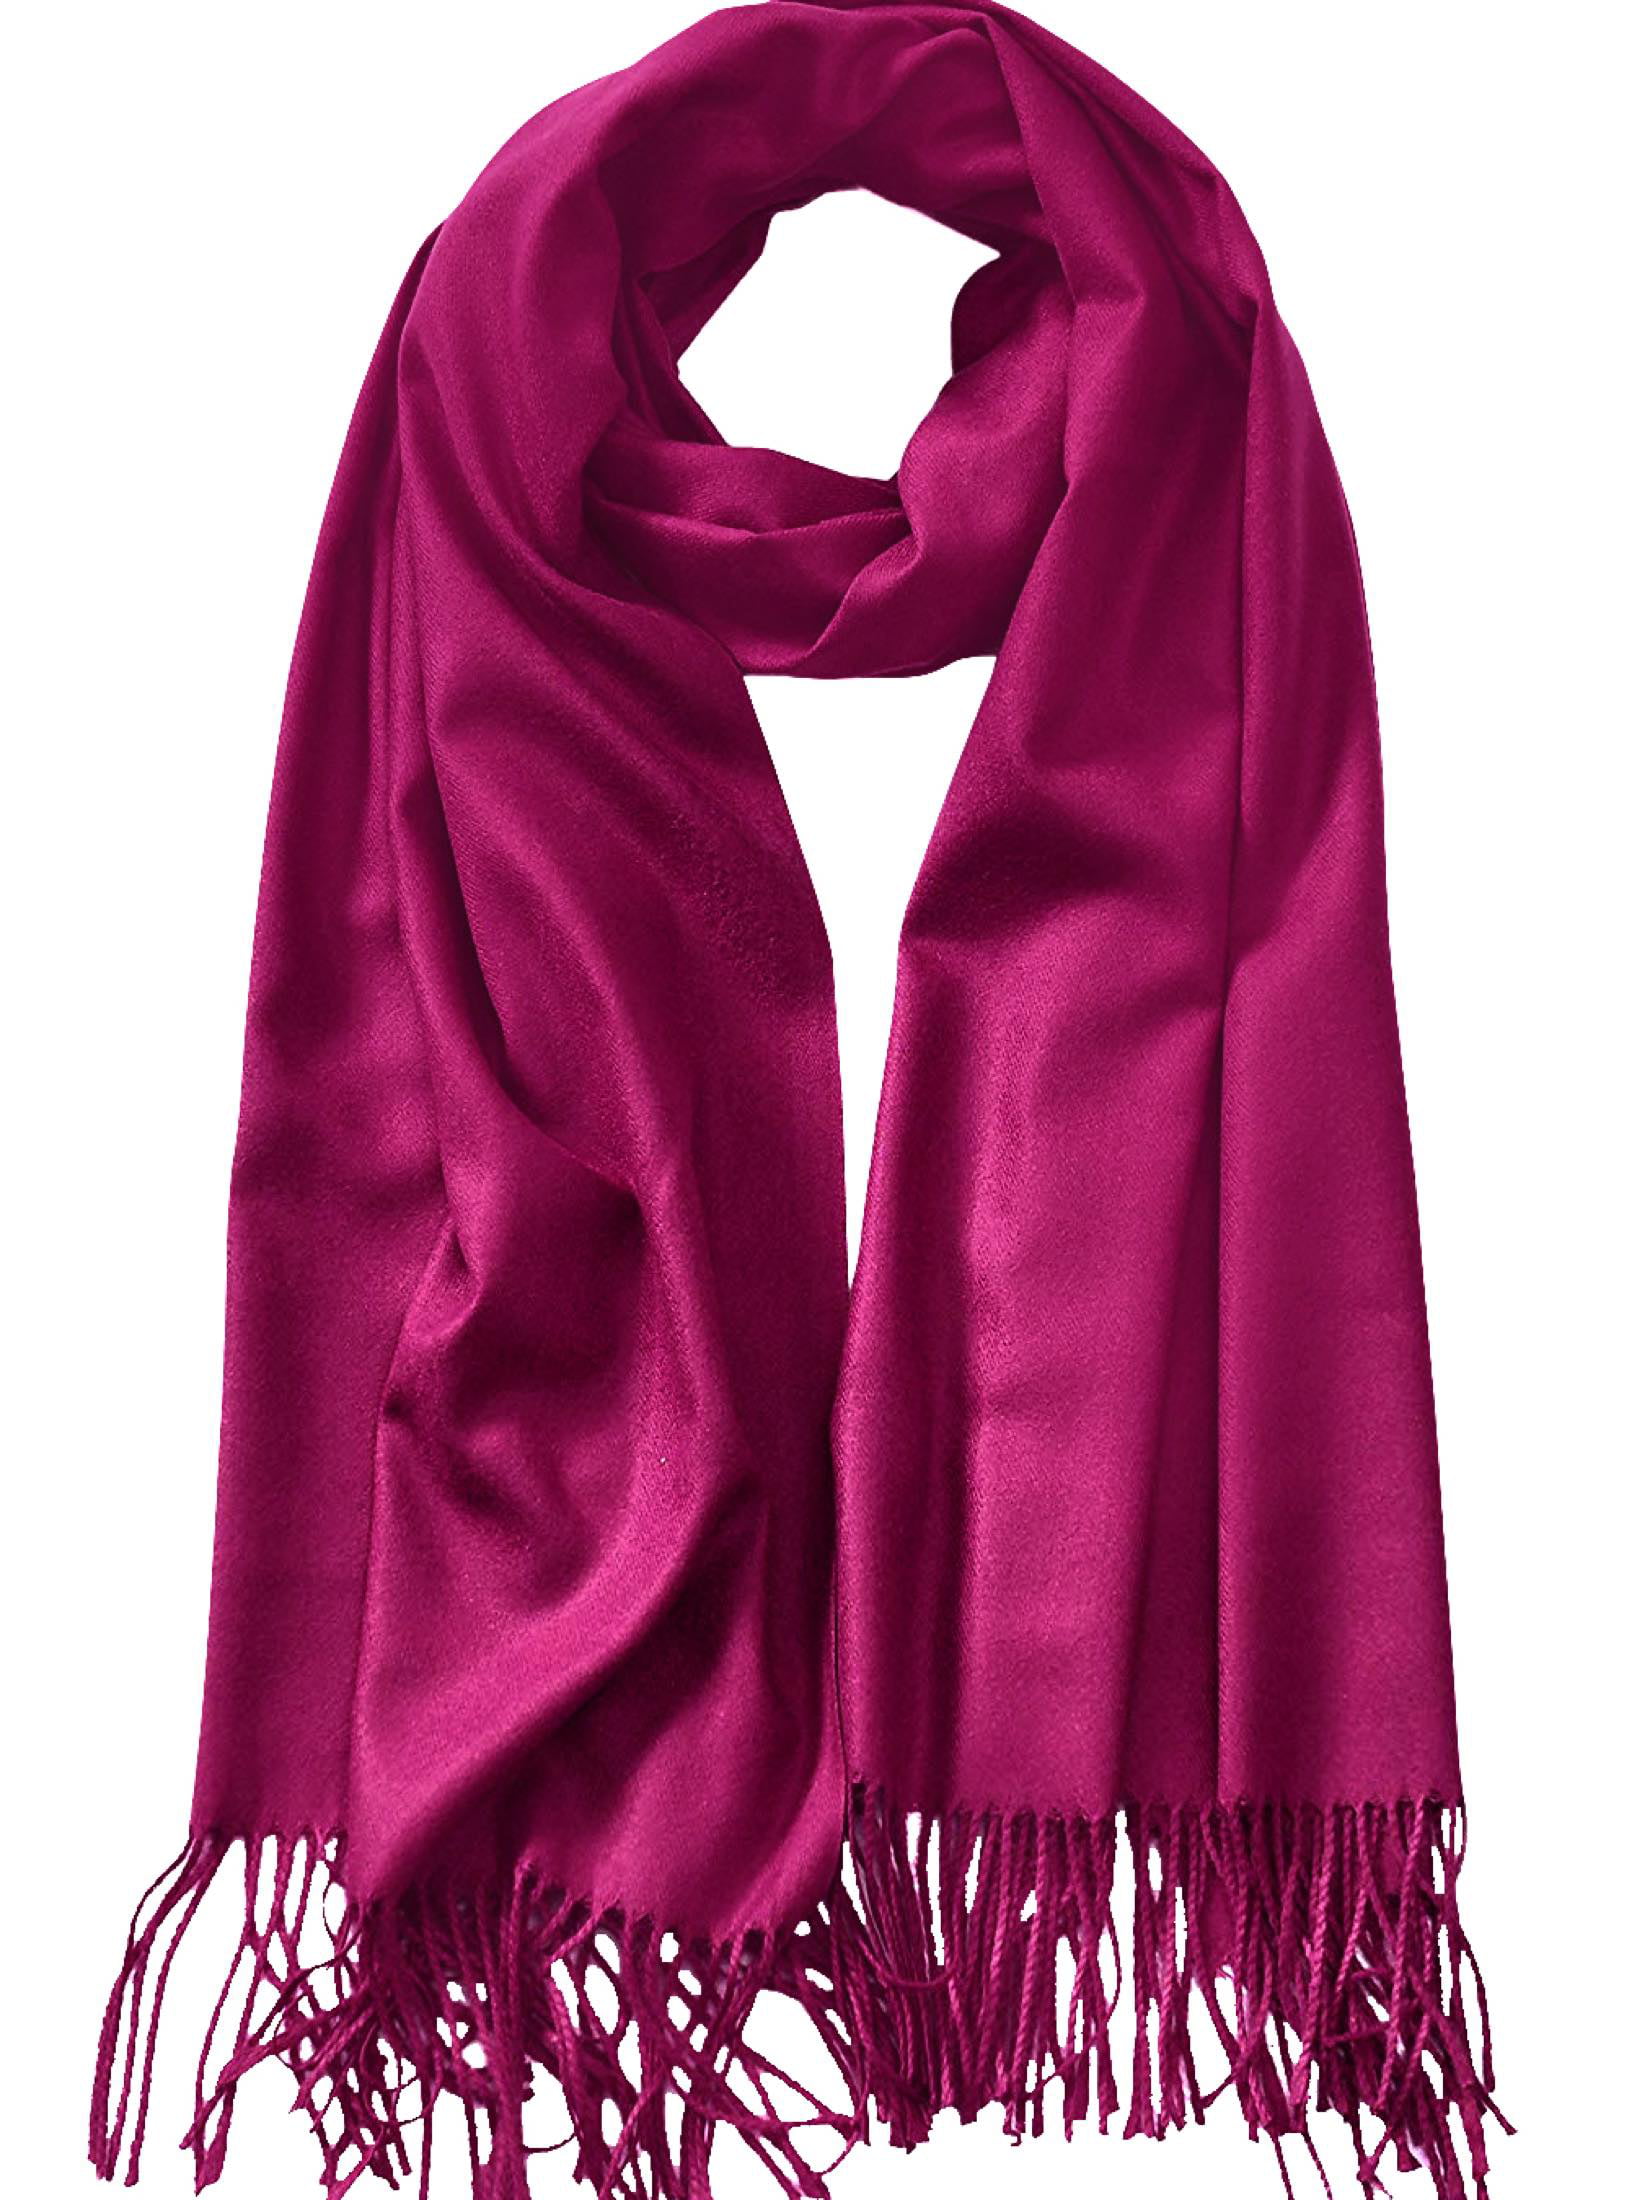 Winter Scarf Yubng Women's Fashion Long Oversized Soft Cashmere Scarves Stylish Warm Blanket Winter Shawl Elegant Wrap 